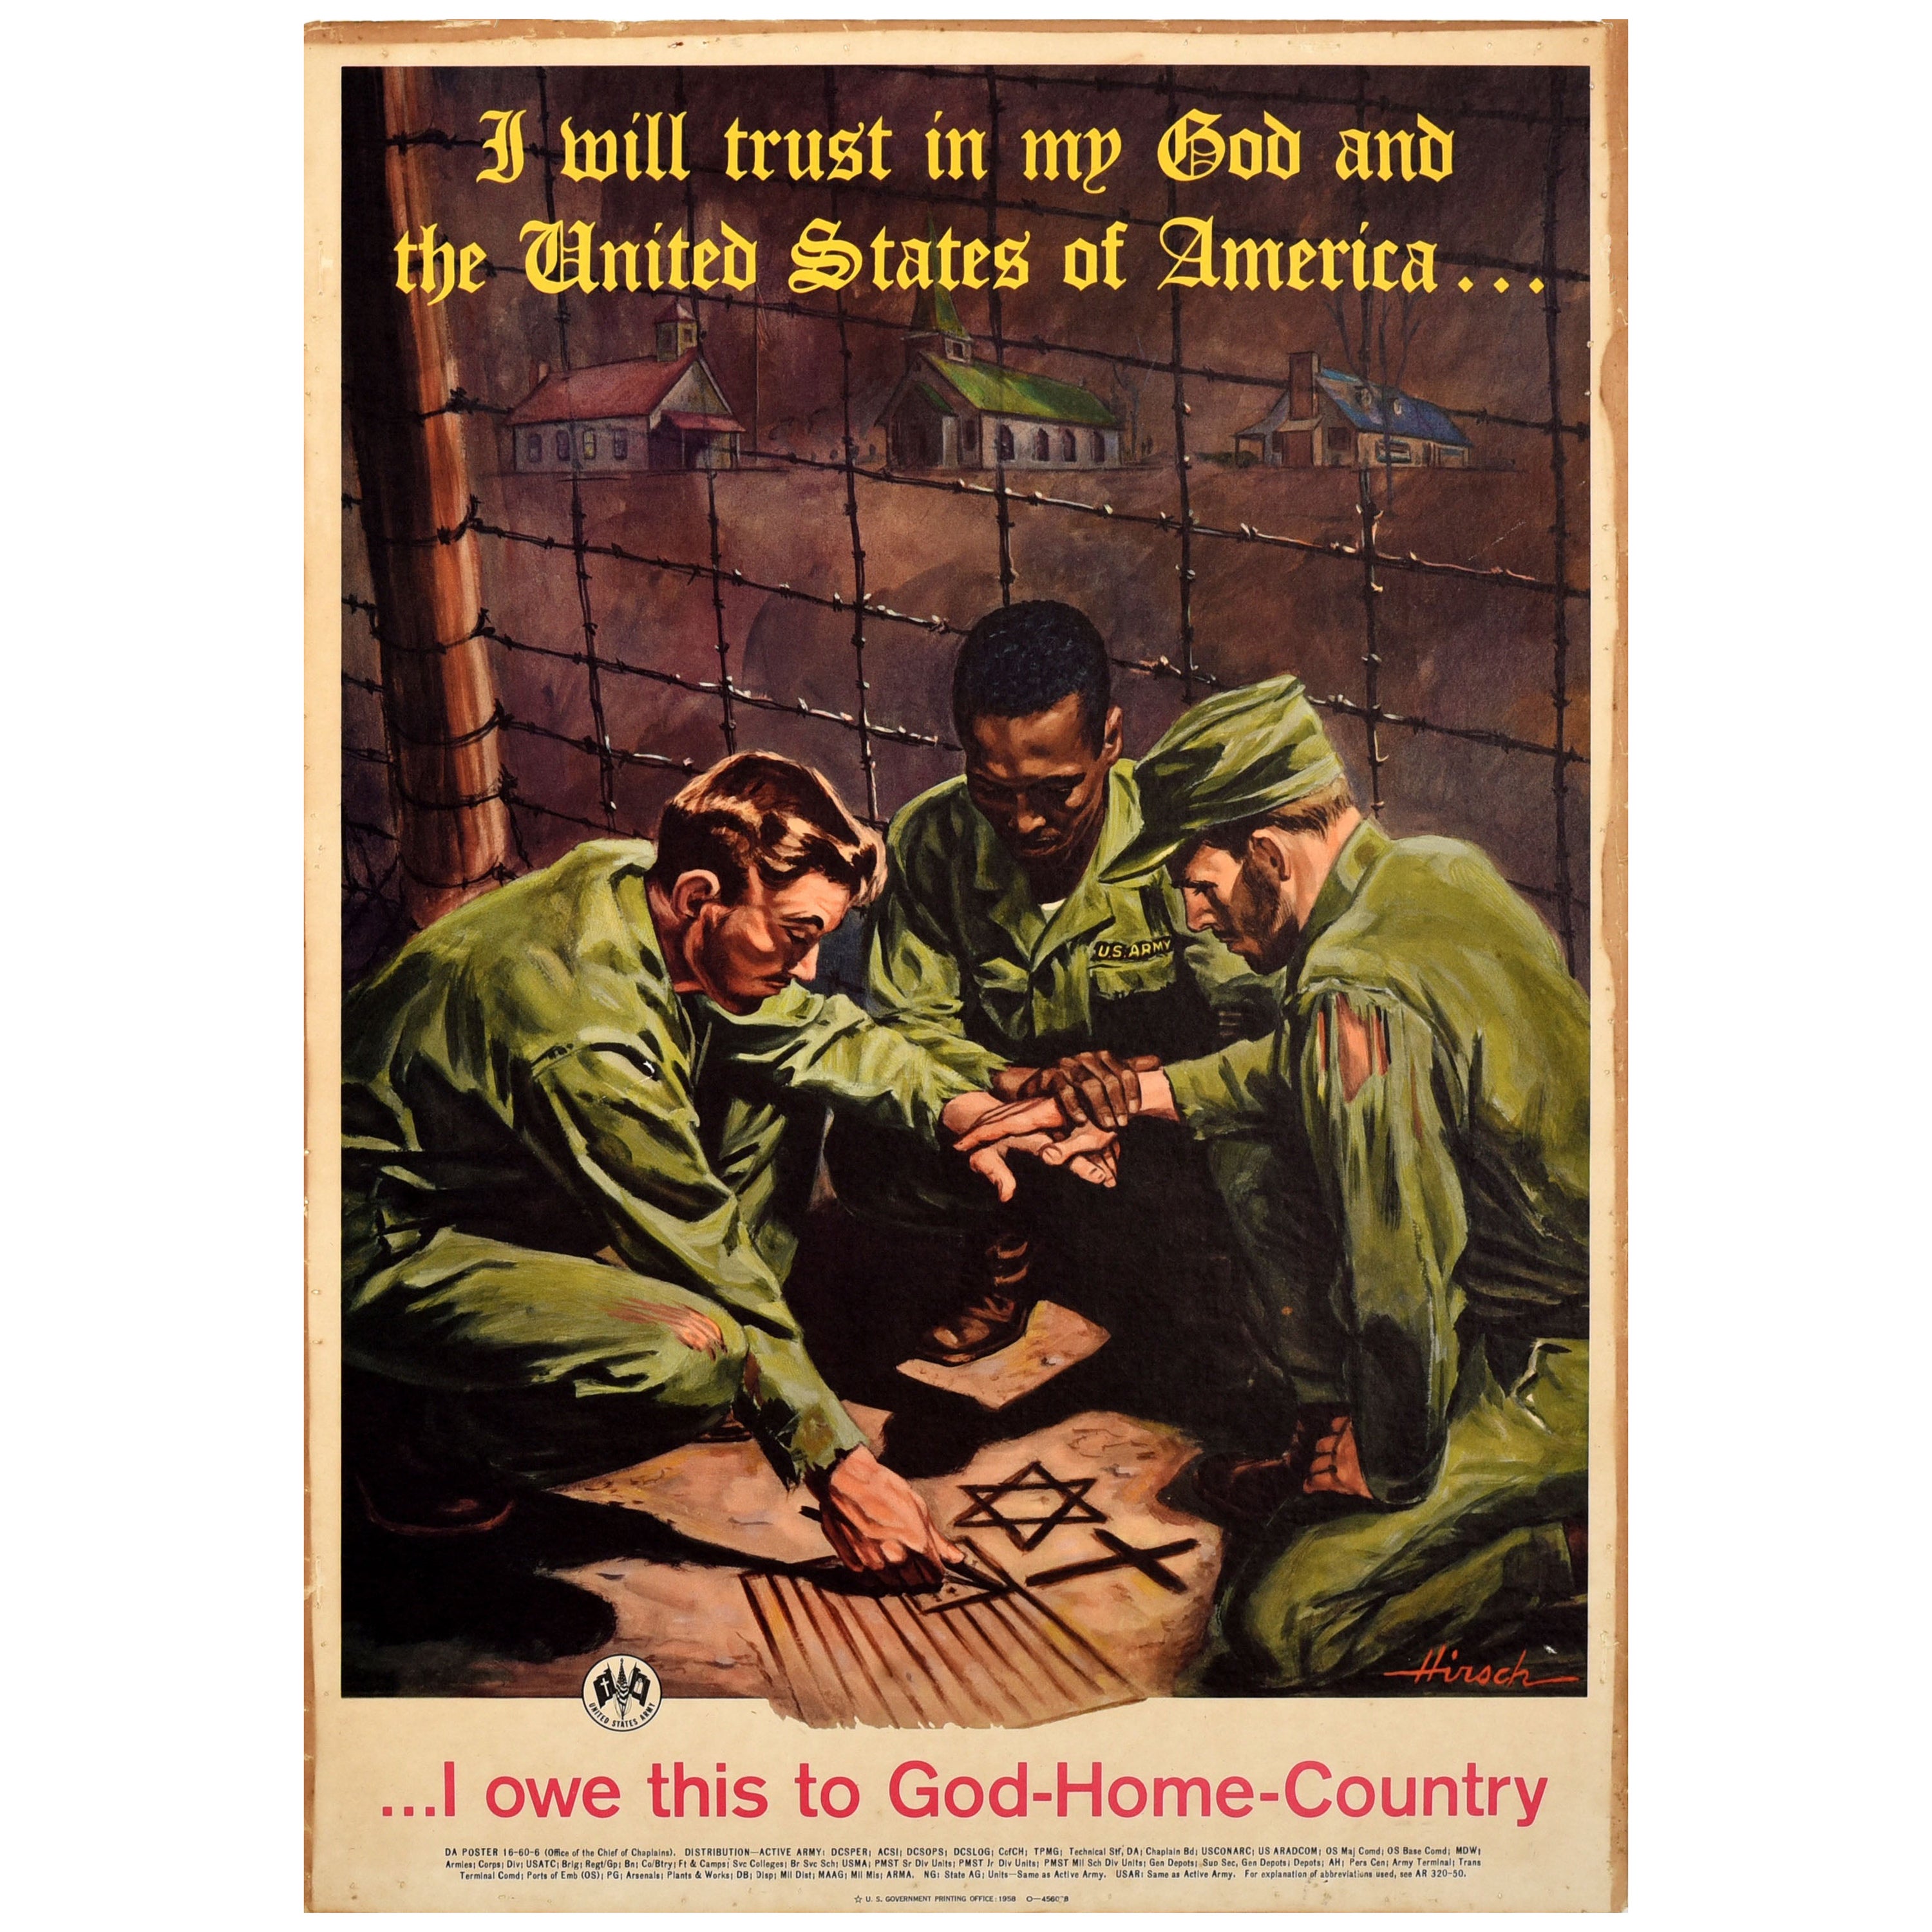 Seltenes Original Vintage Militärisches Propagandaplakat, Multiracial POW, WWII, US-Armee